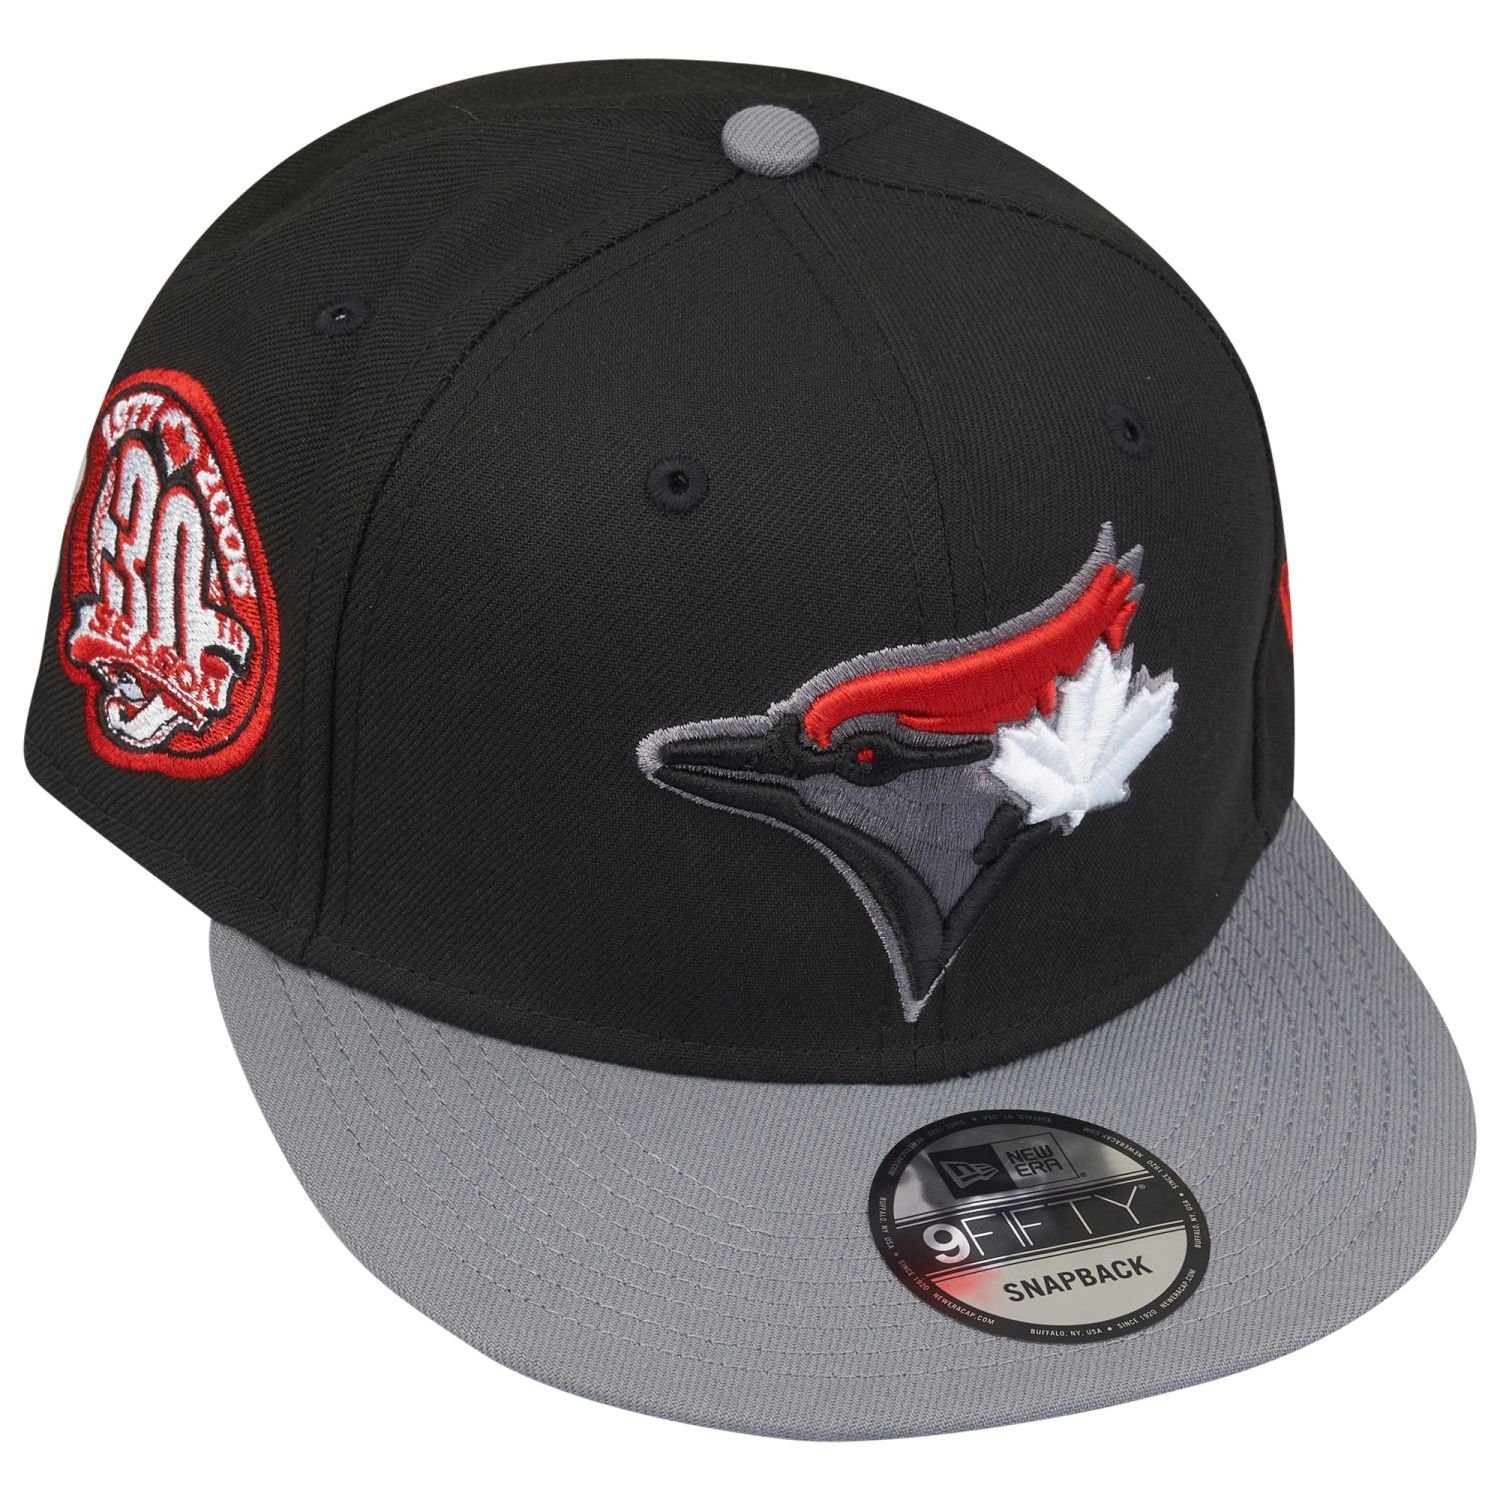 New Era Snapback Cap 9Fifty COOPERSTOWN Toronto Jays